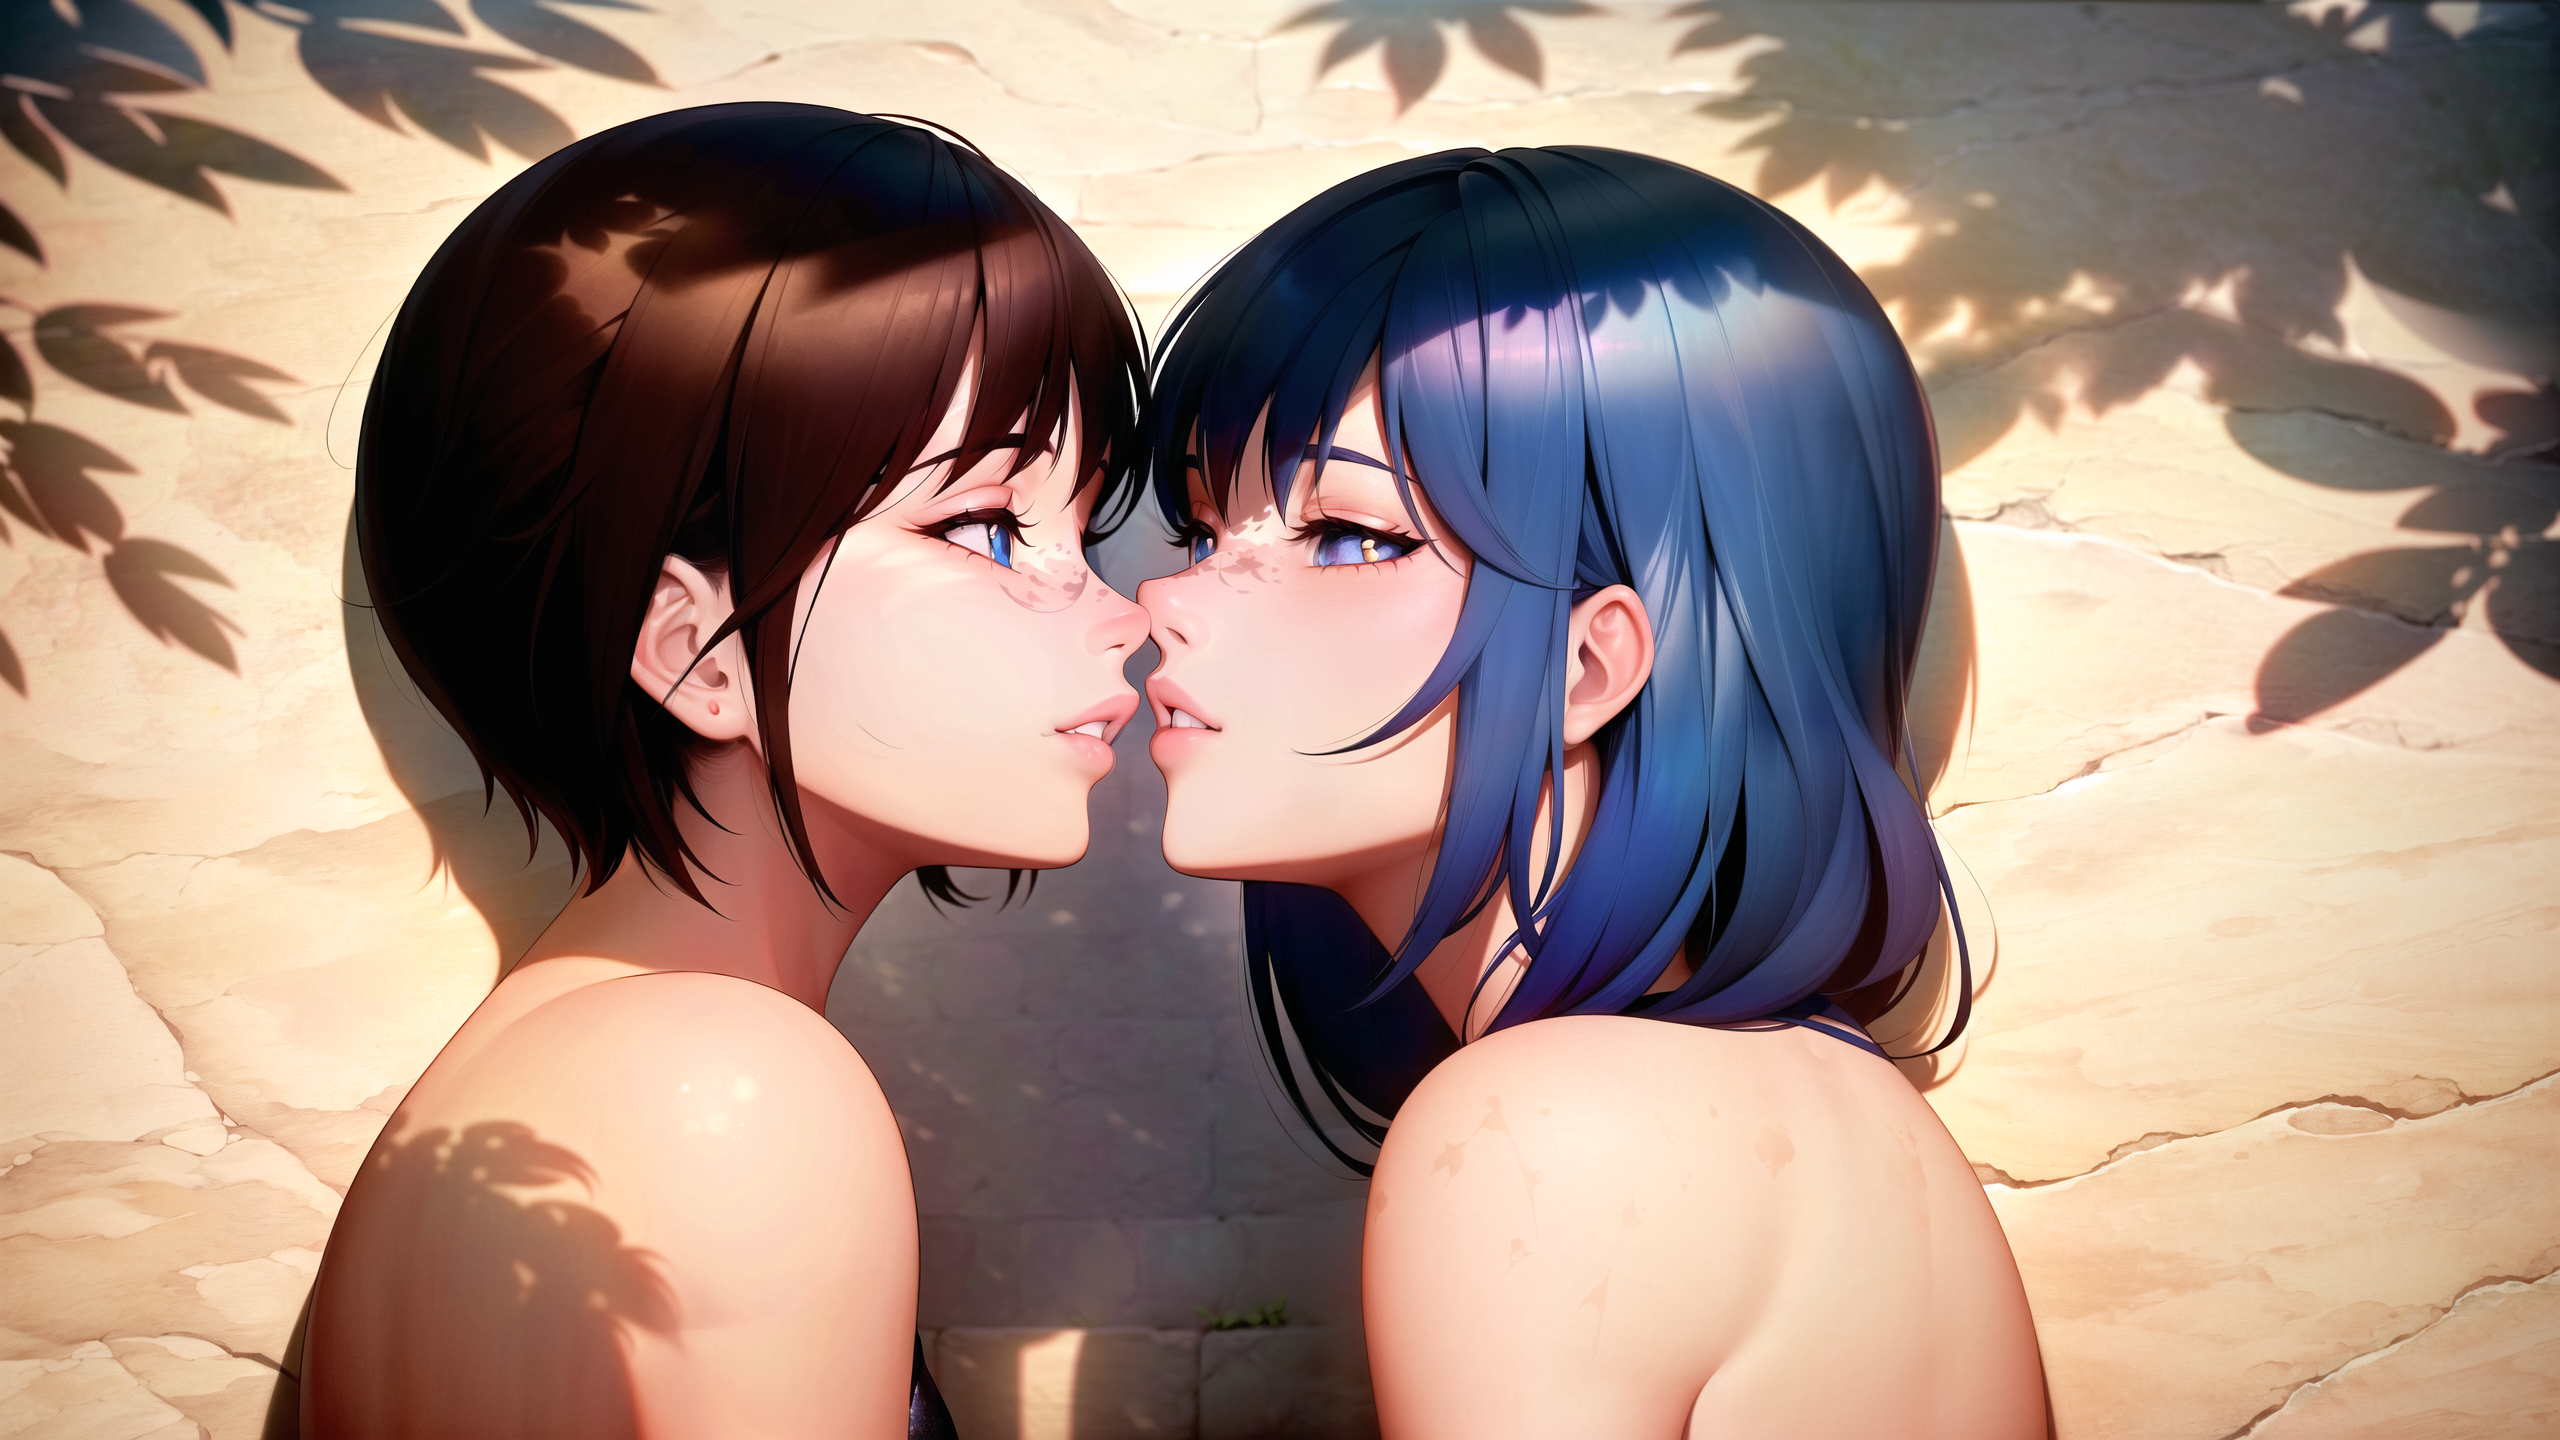 Anime Kisses - v1, Stable Diffusion LoRA